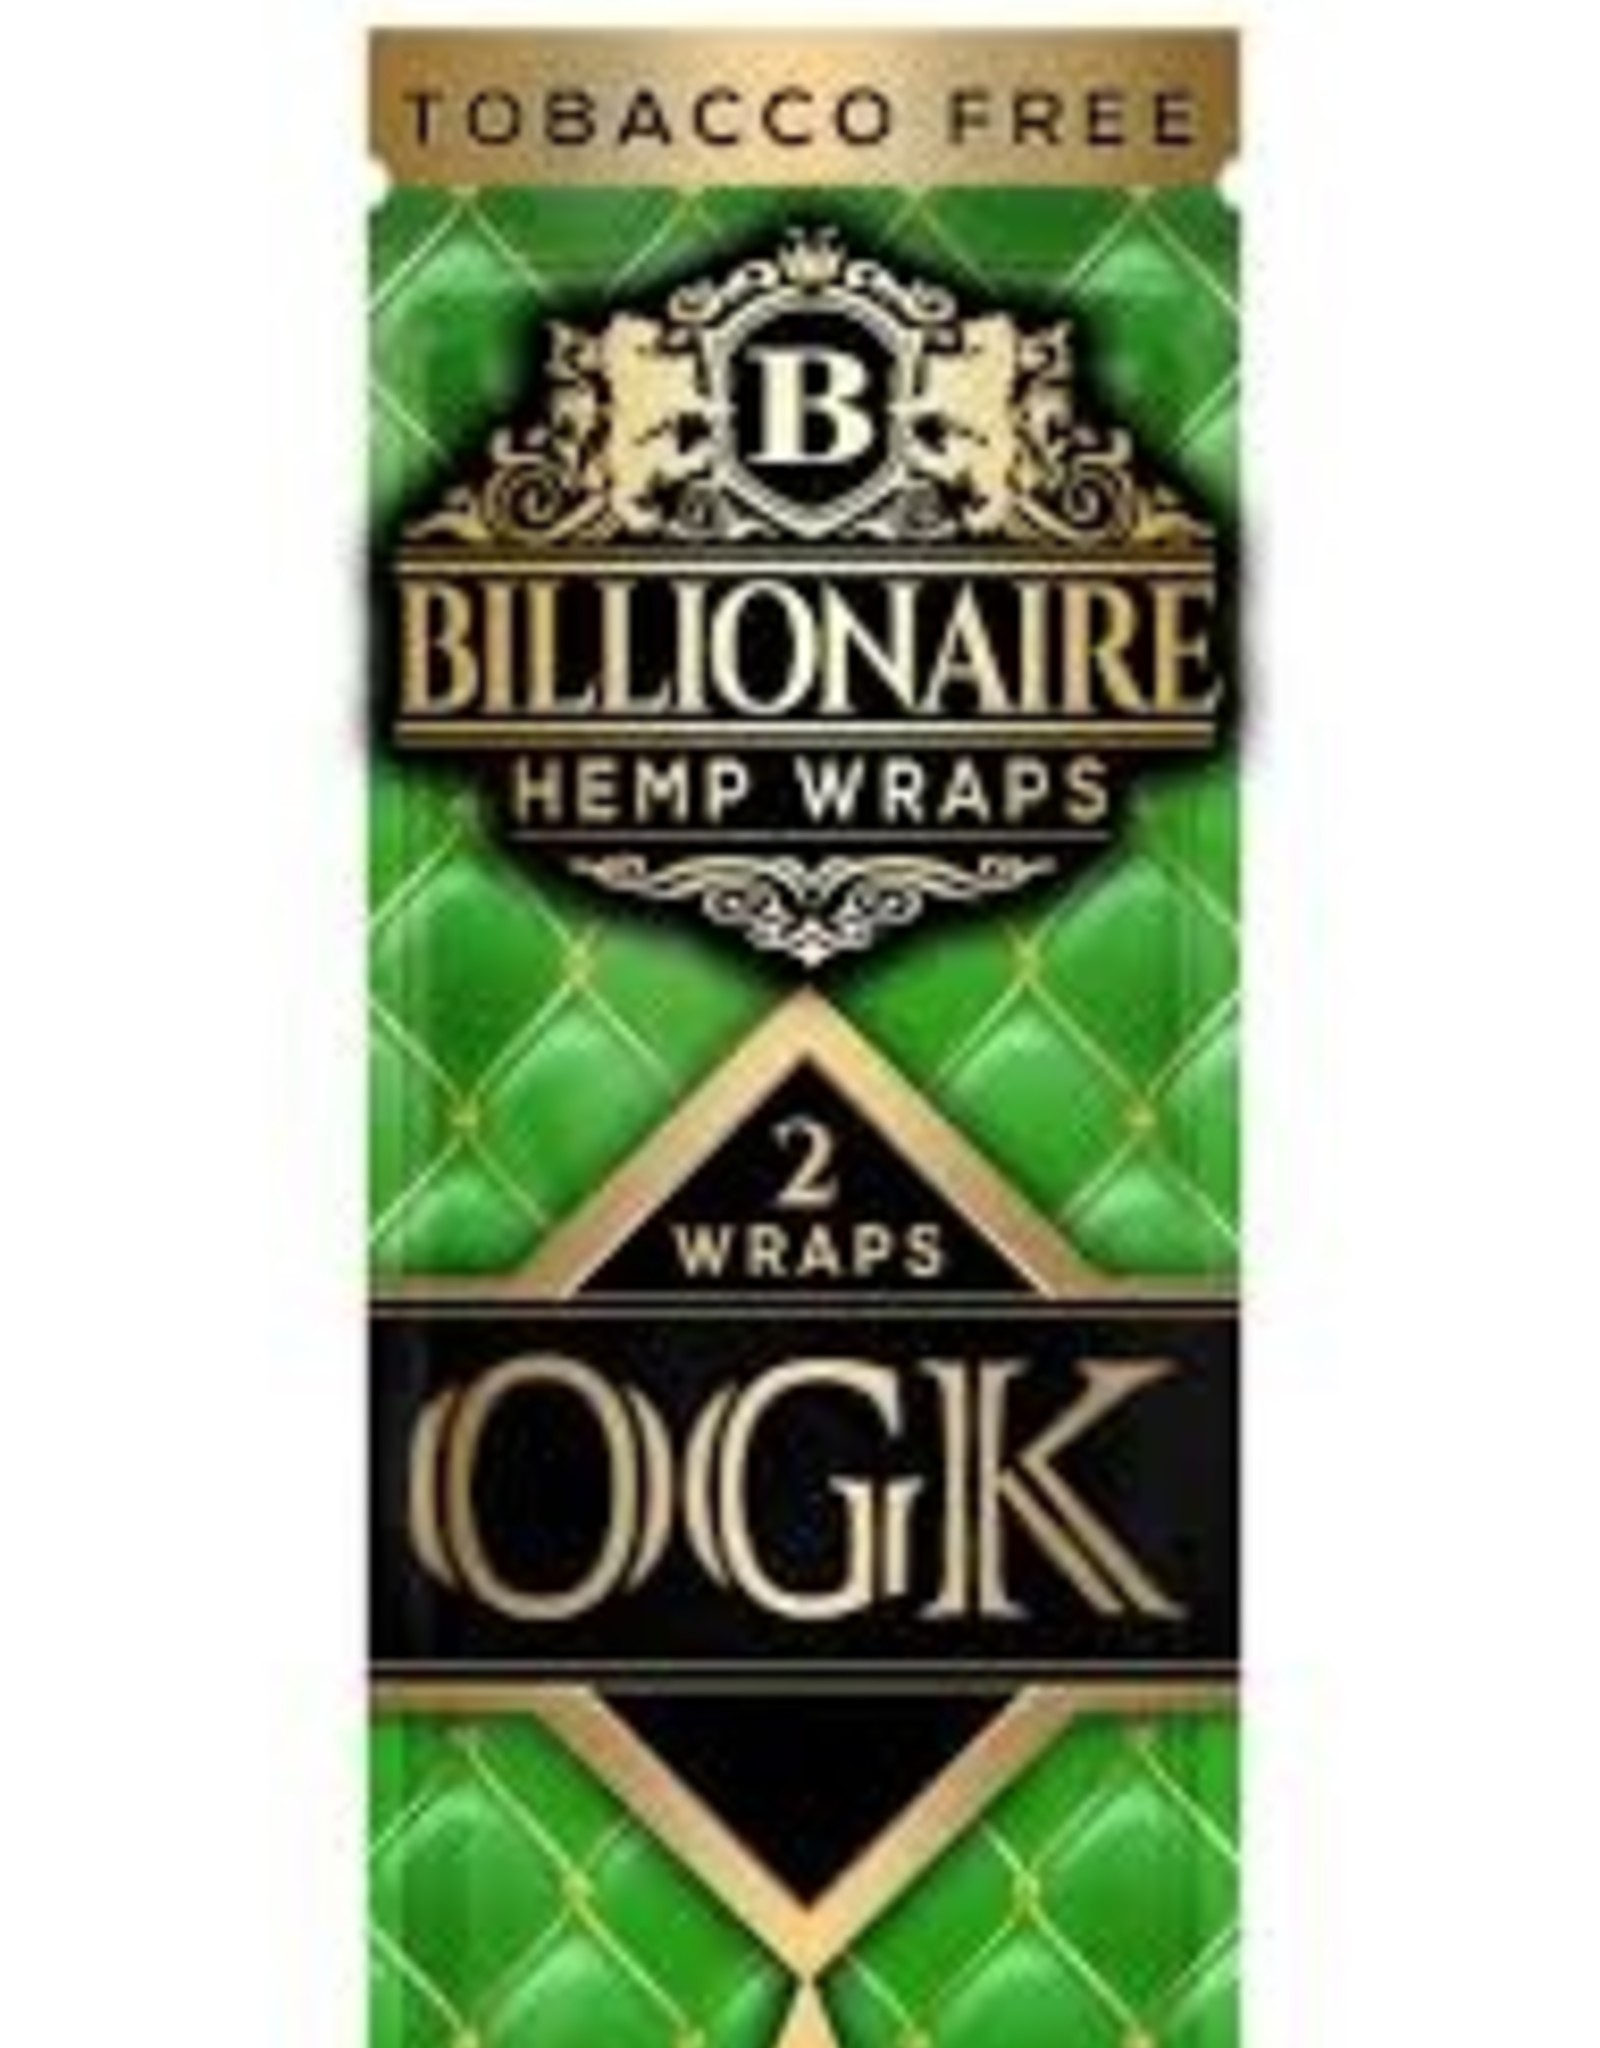 Ultimate Brands Billionaire OGK Hemp Wraps